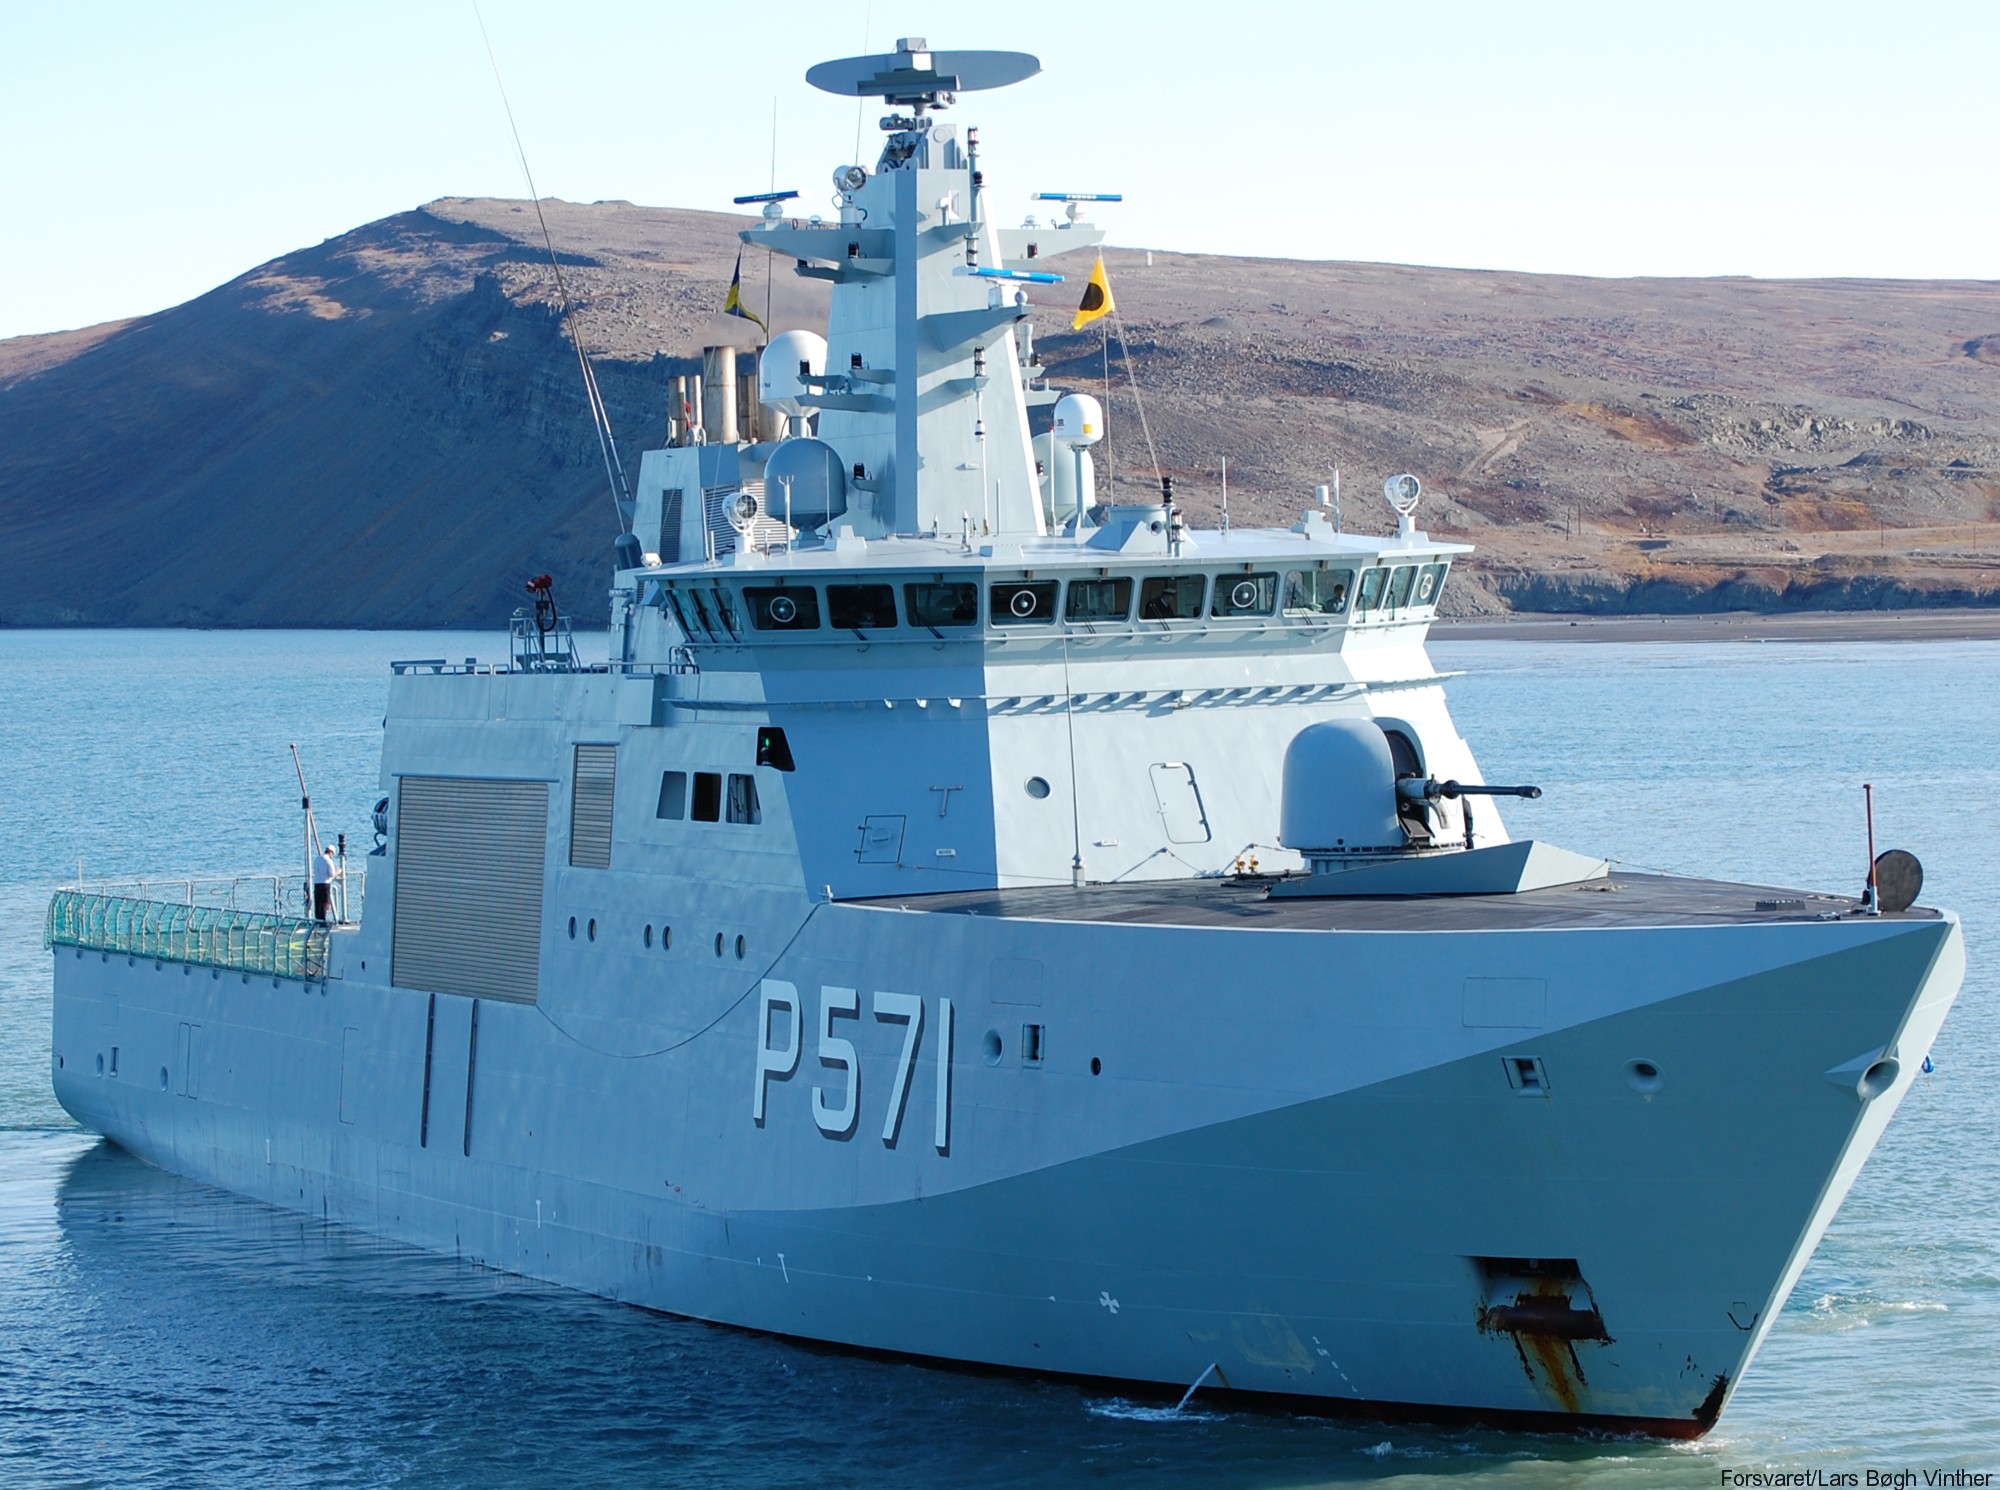 p-571 hdms ejnar mikkelsen knud rasmussen class offshore patrol vessel royal danish navy 34x